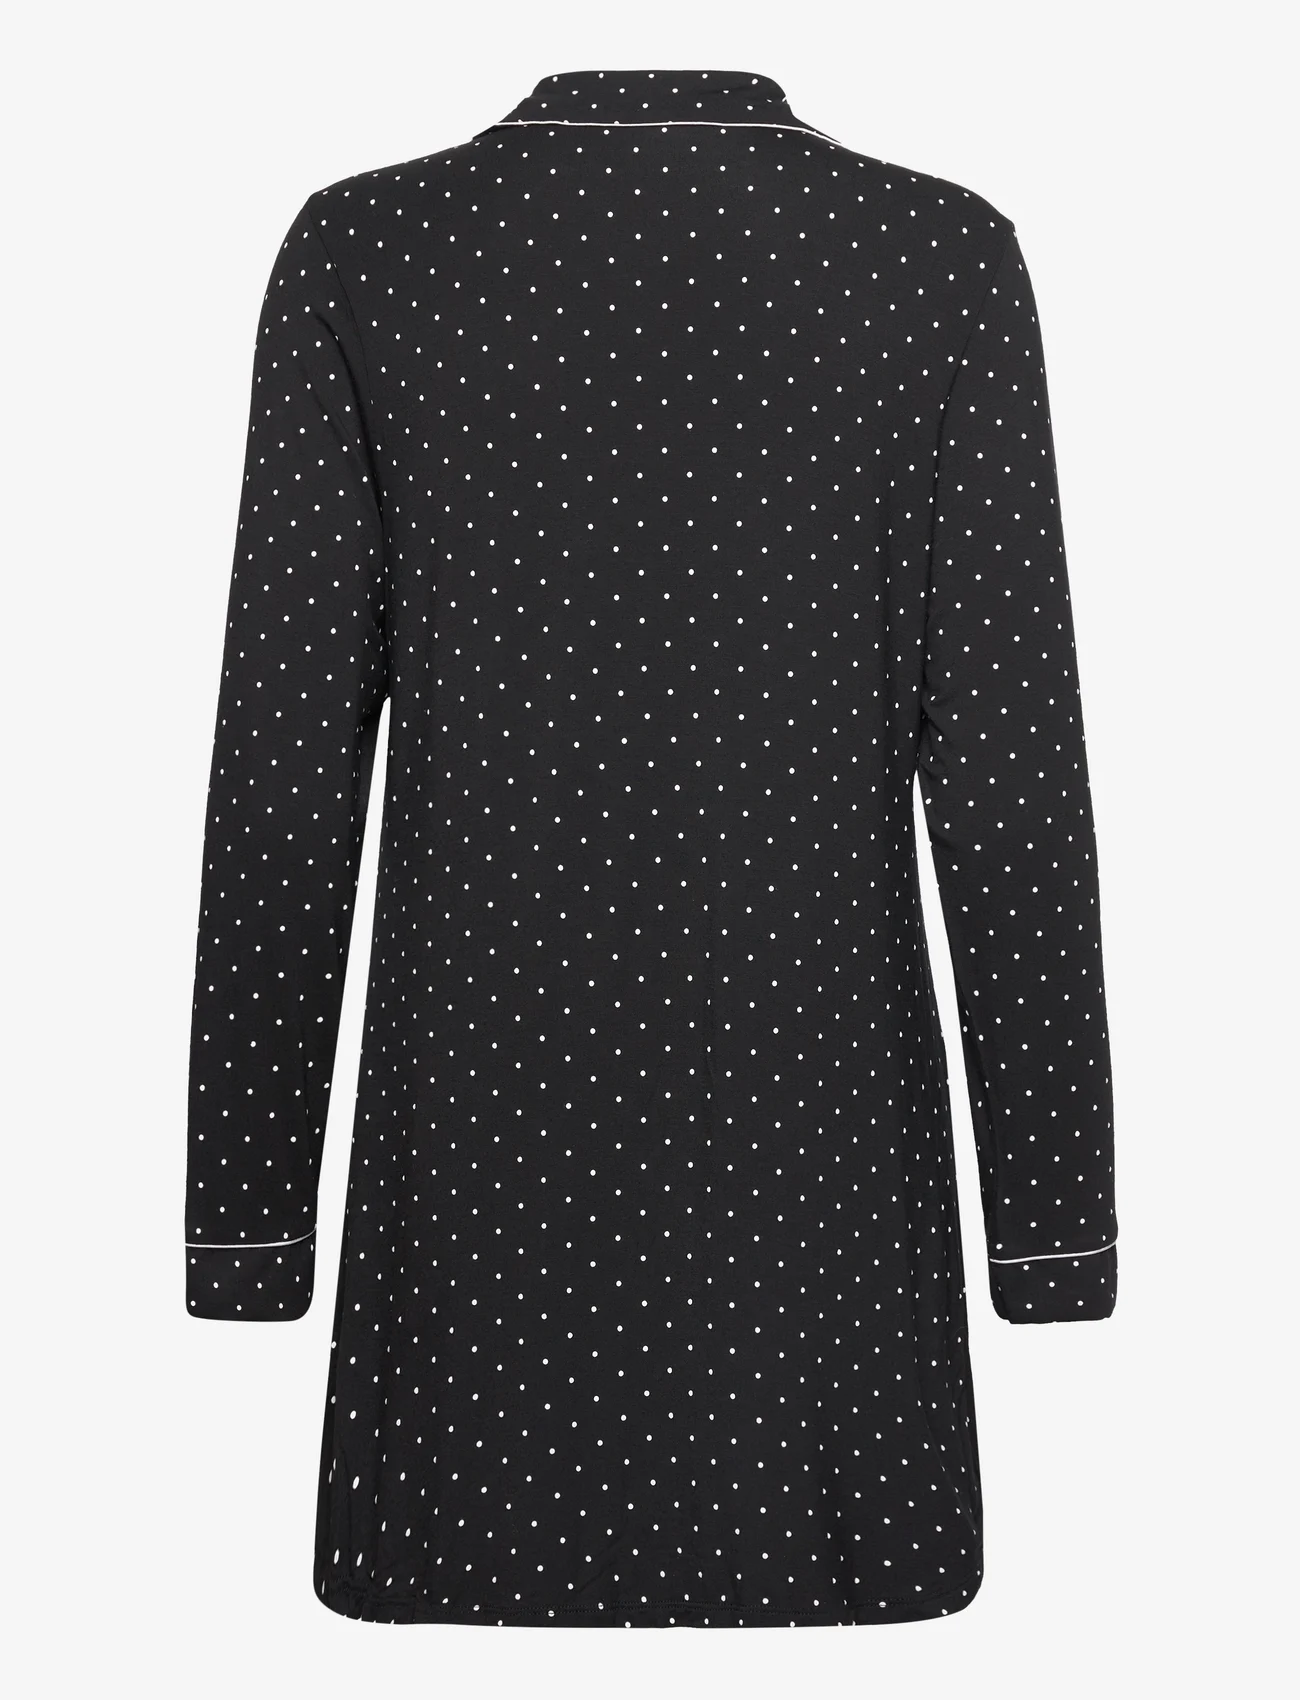 Hunkemöller - Shirtdress LS Jersey Dots - lowest prices - black - 1